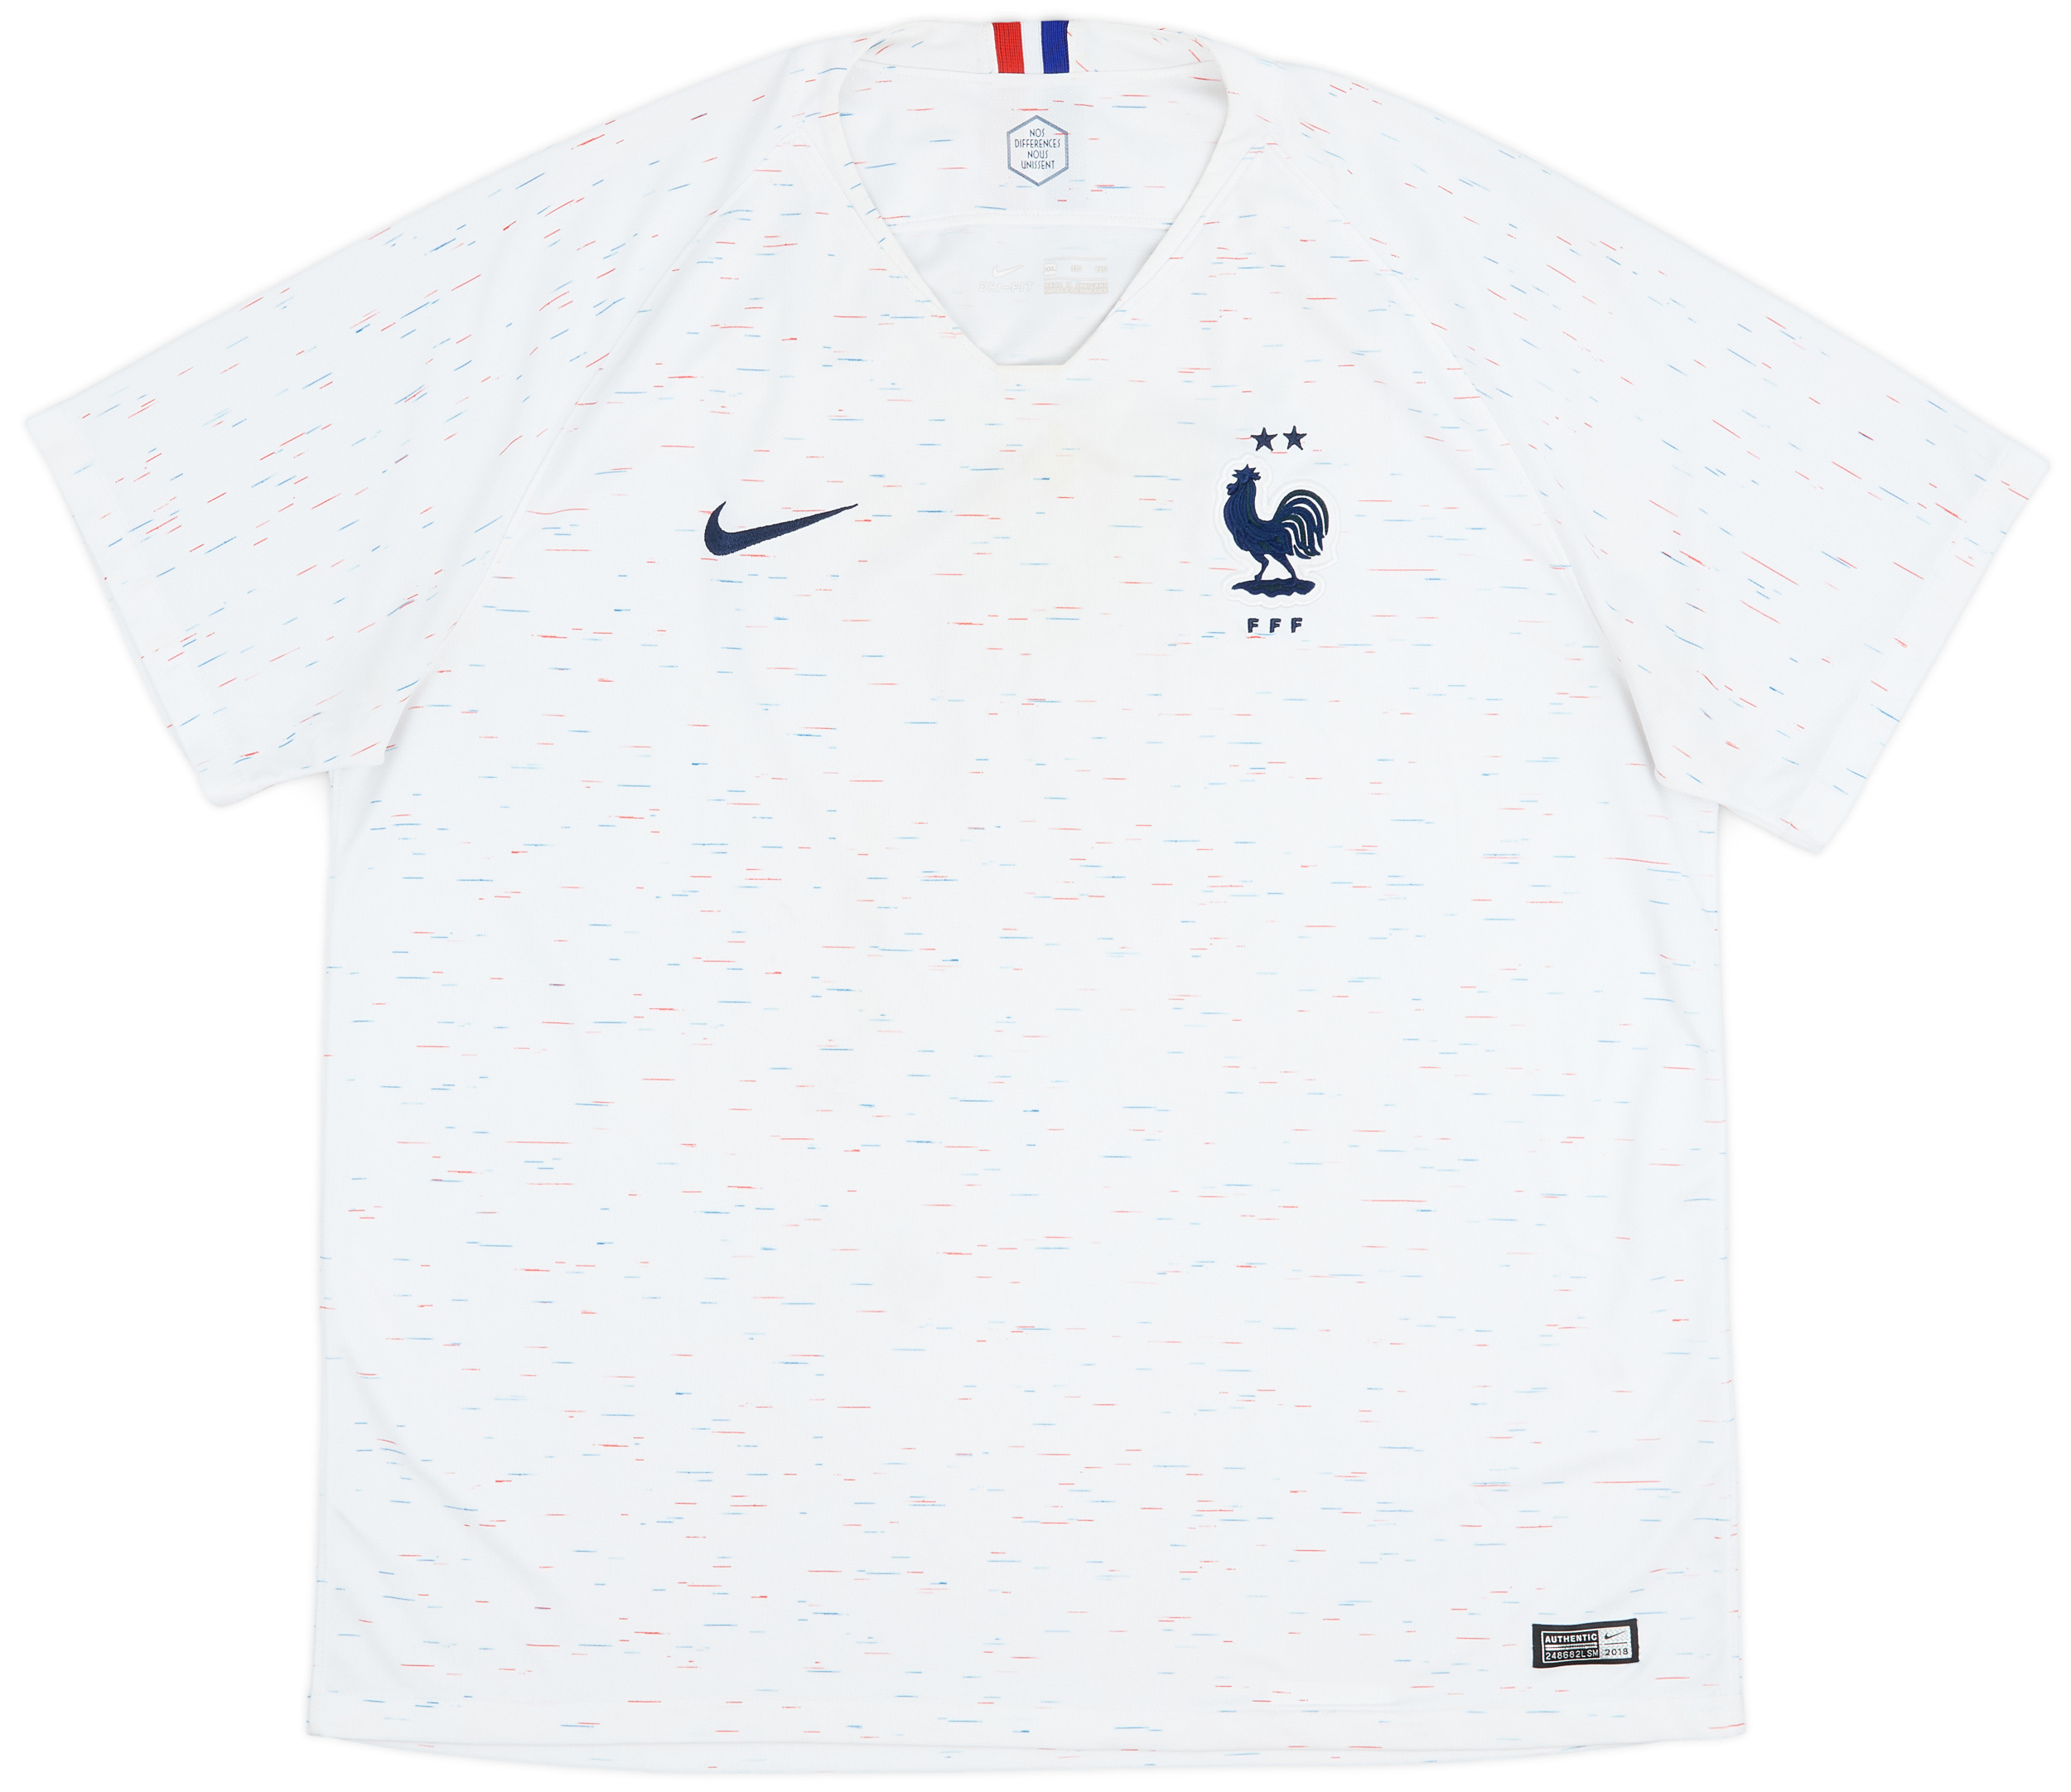 2018 France Away Shirt - 5/10 - ()